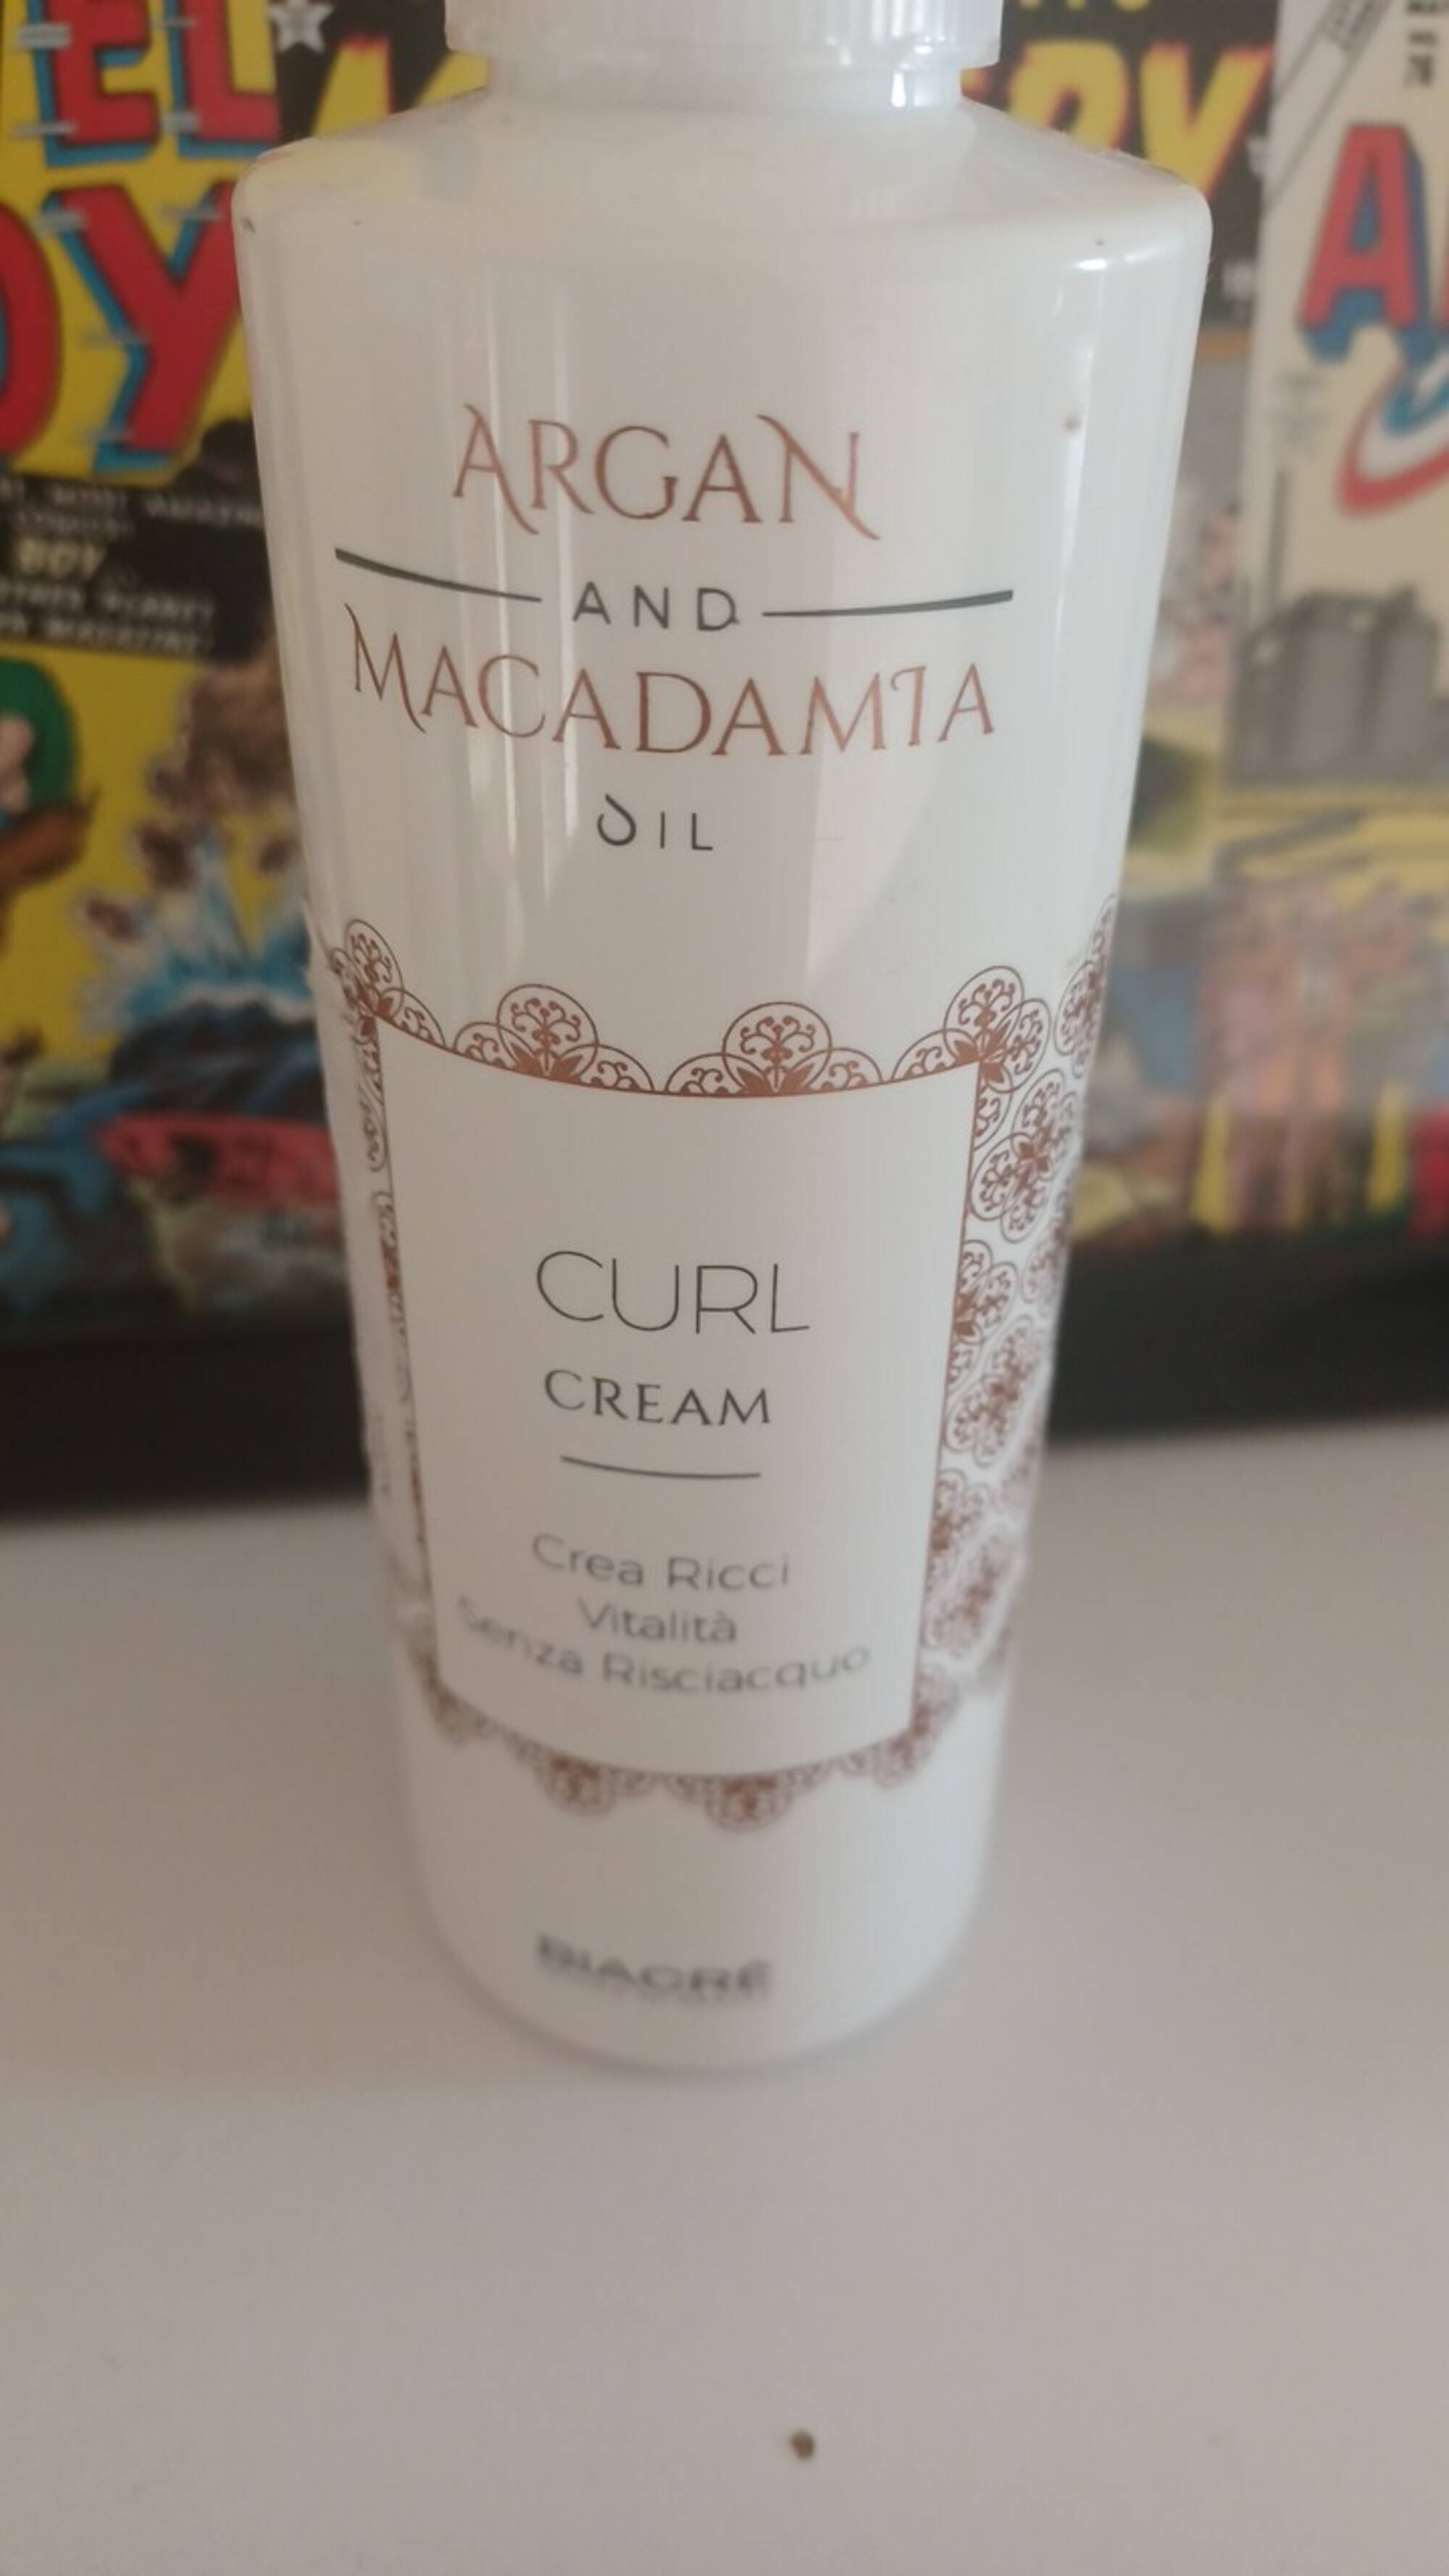 BIACRÈ - Argan and macadamia oil - Curl cream 